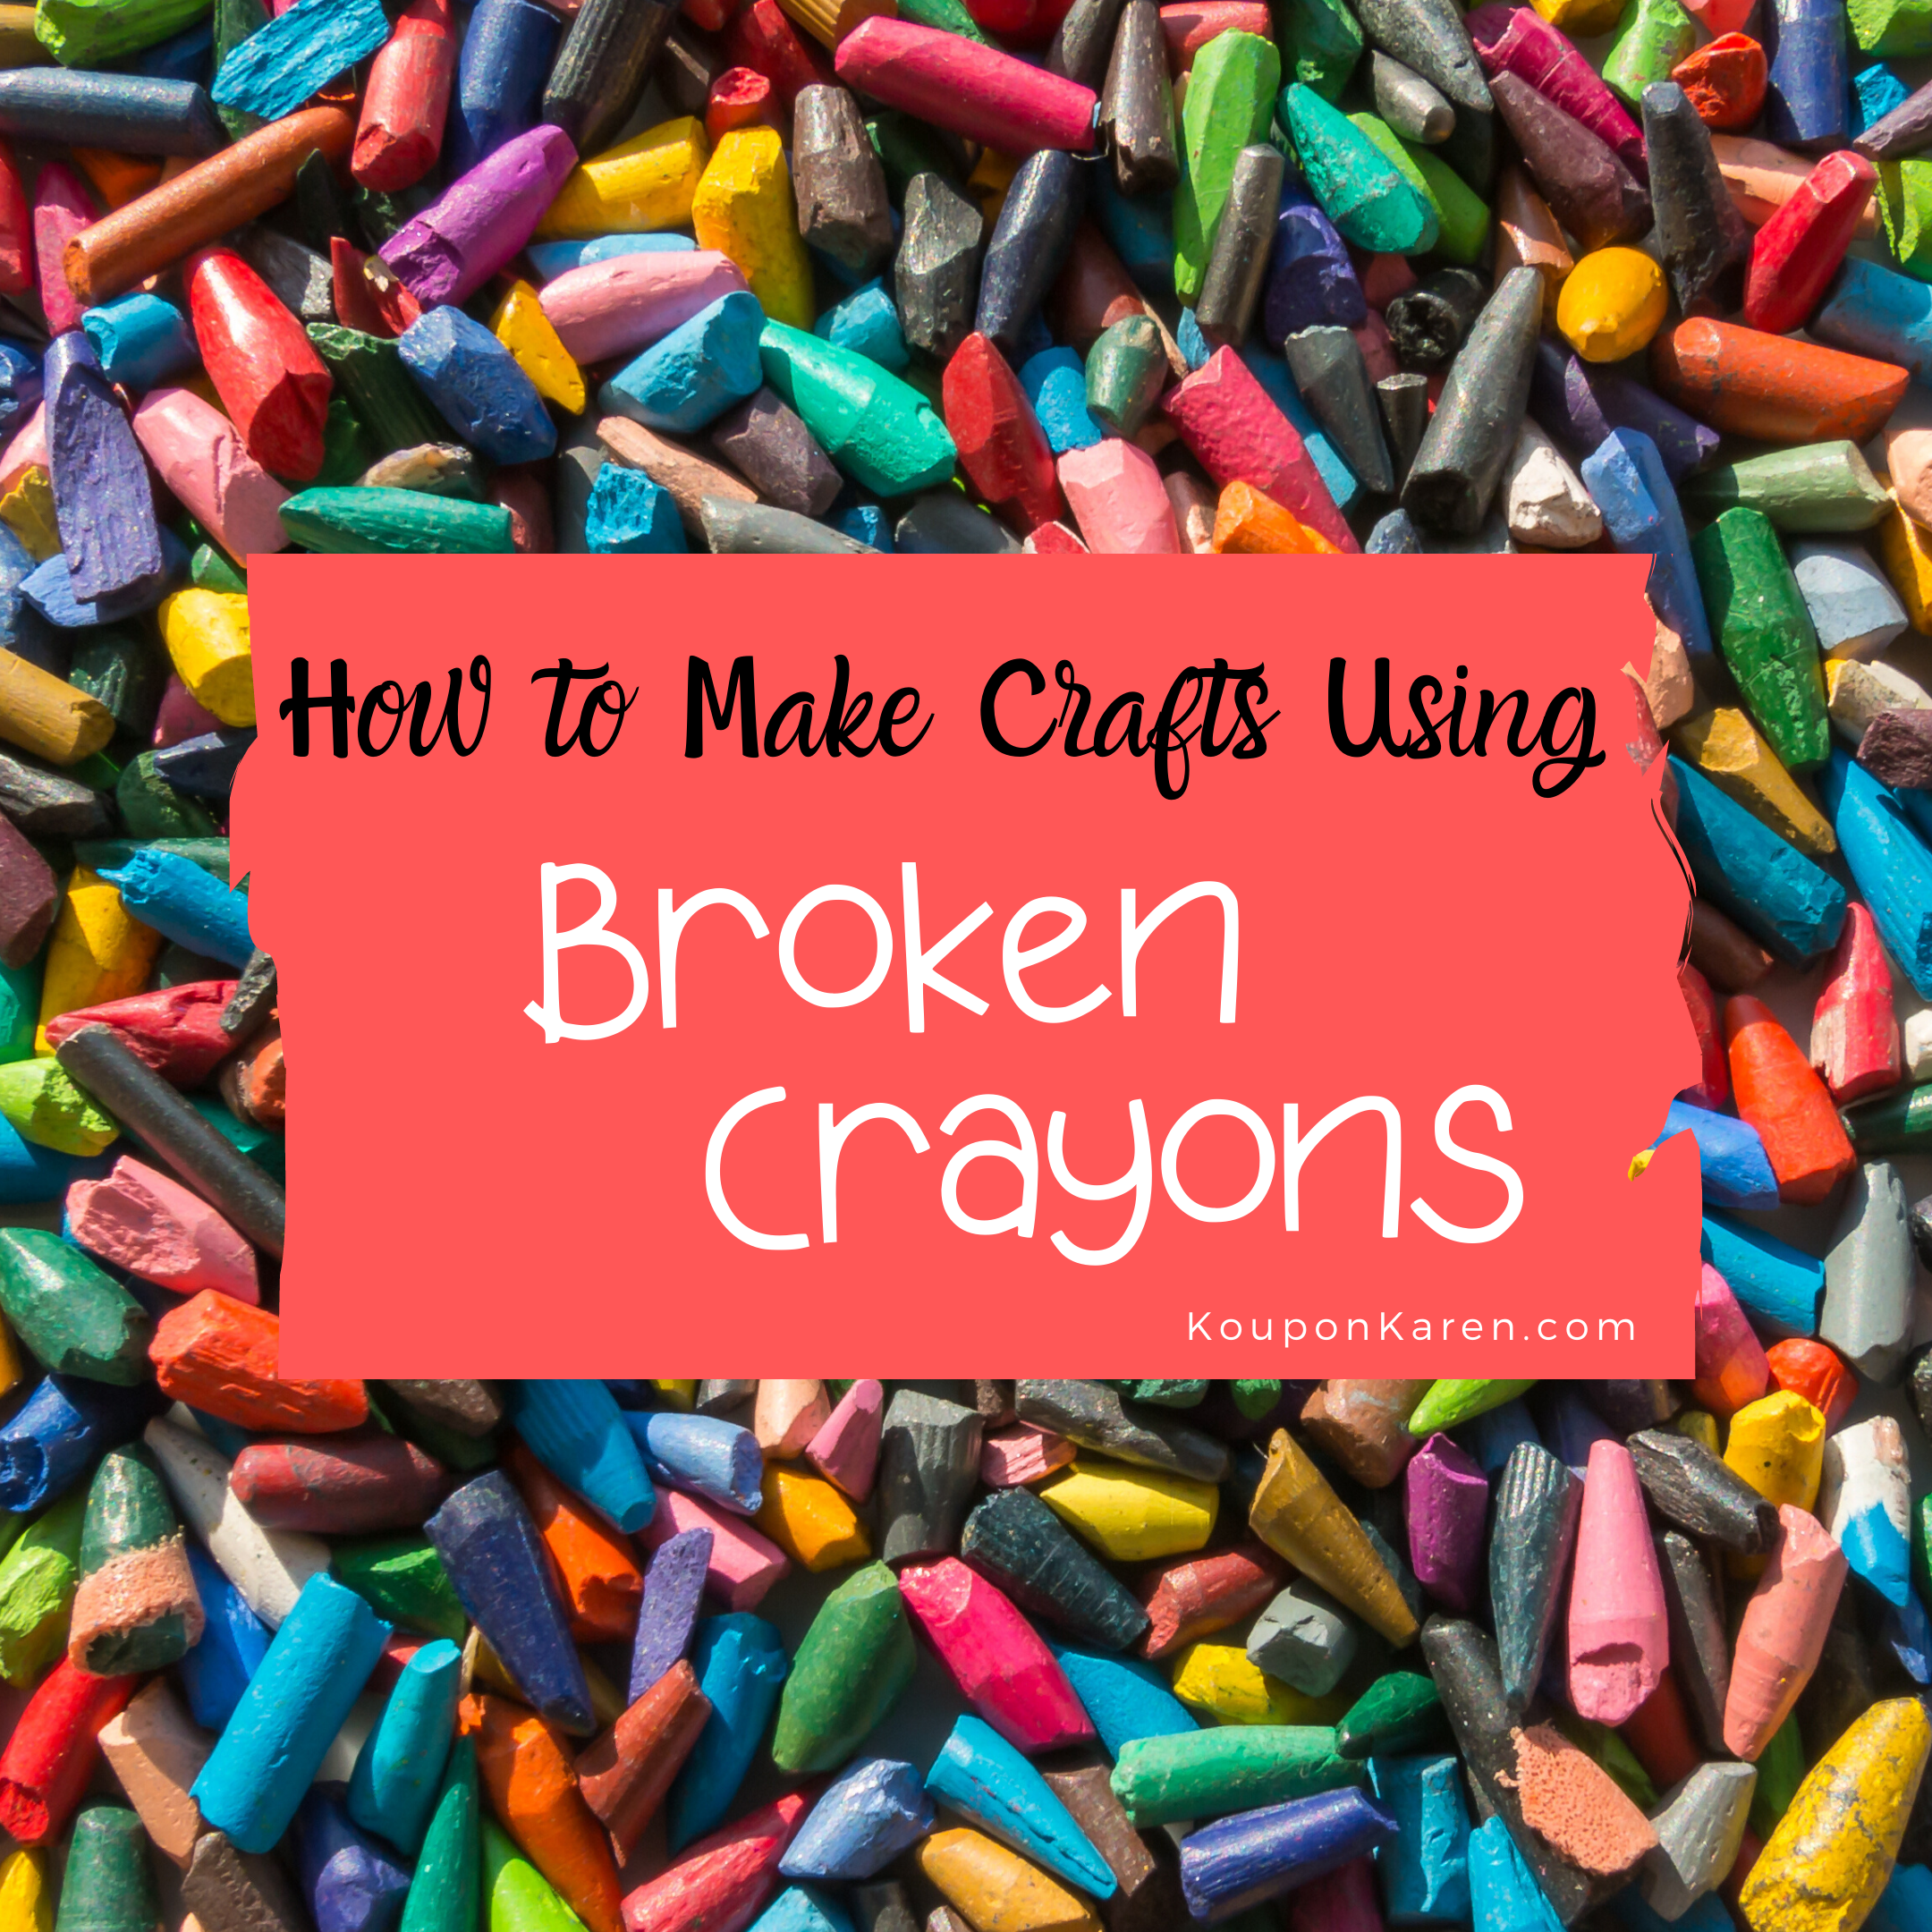 How to Make Crafts Using Broken Crayons